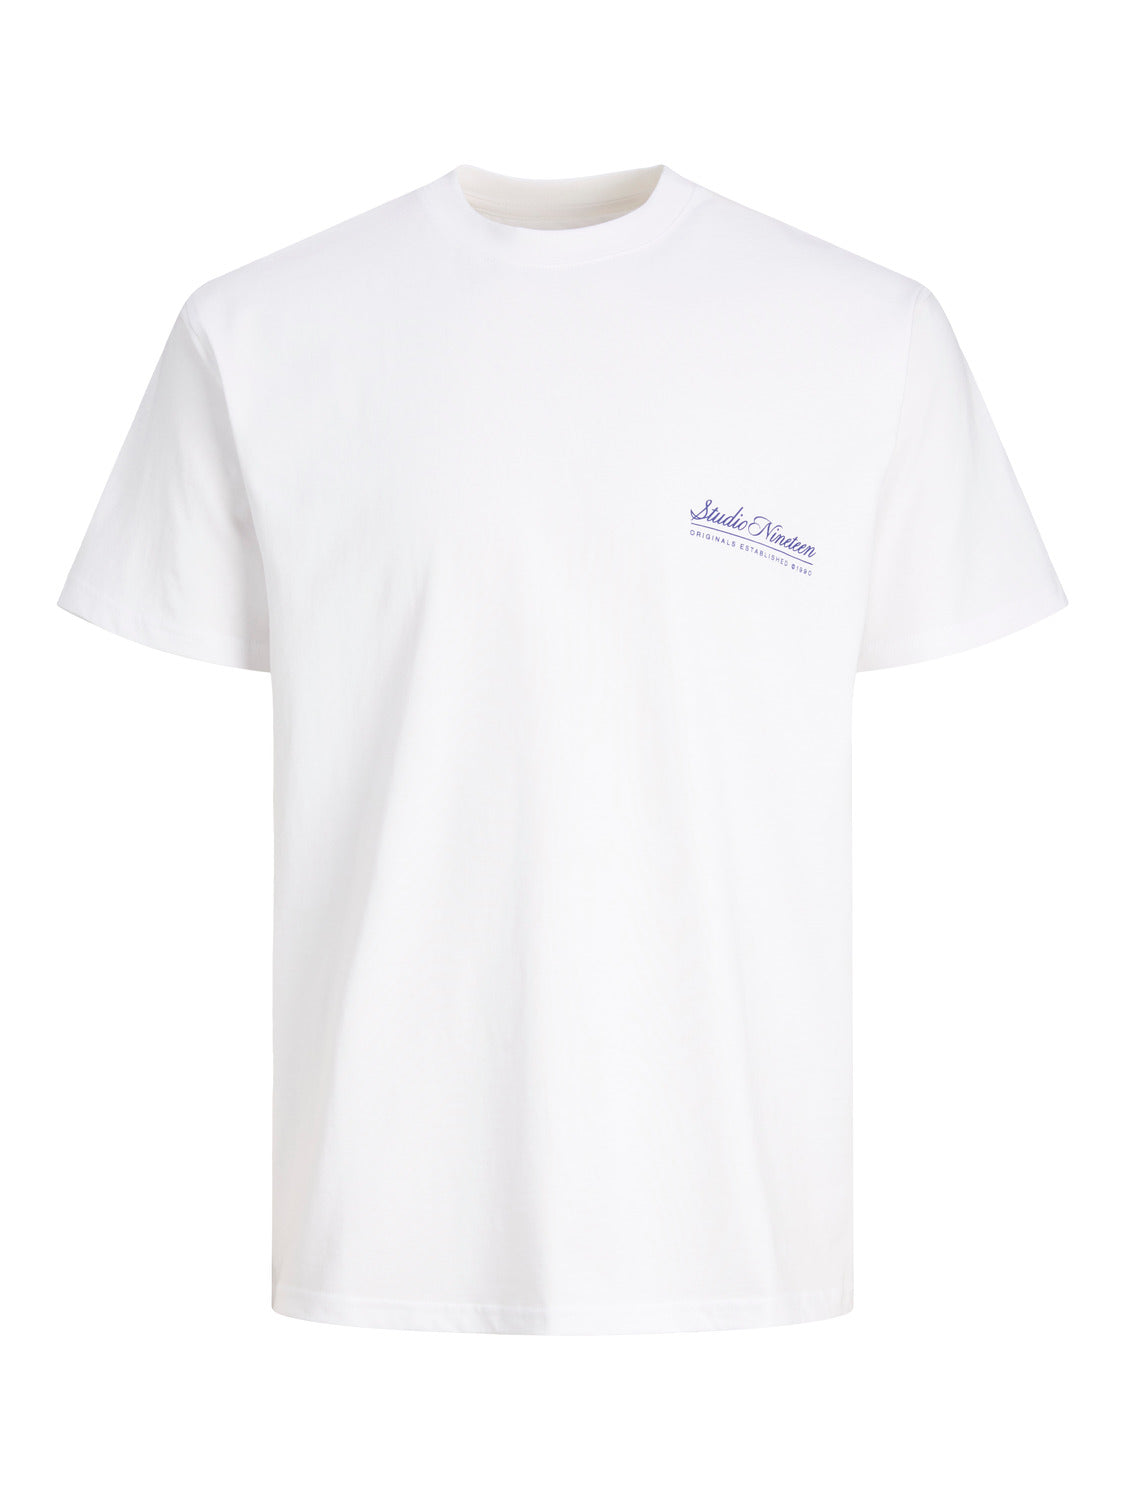 Camiseta de manga corta JORTEAM - Blanco